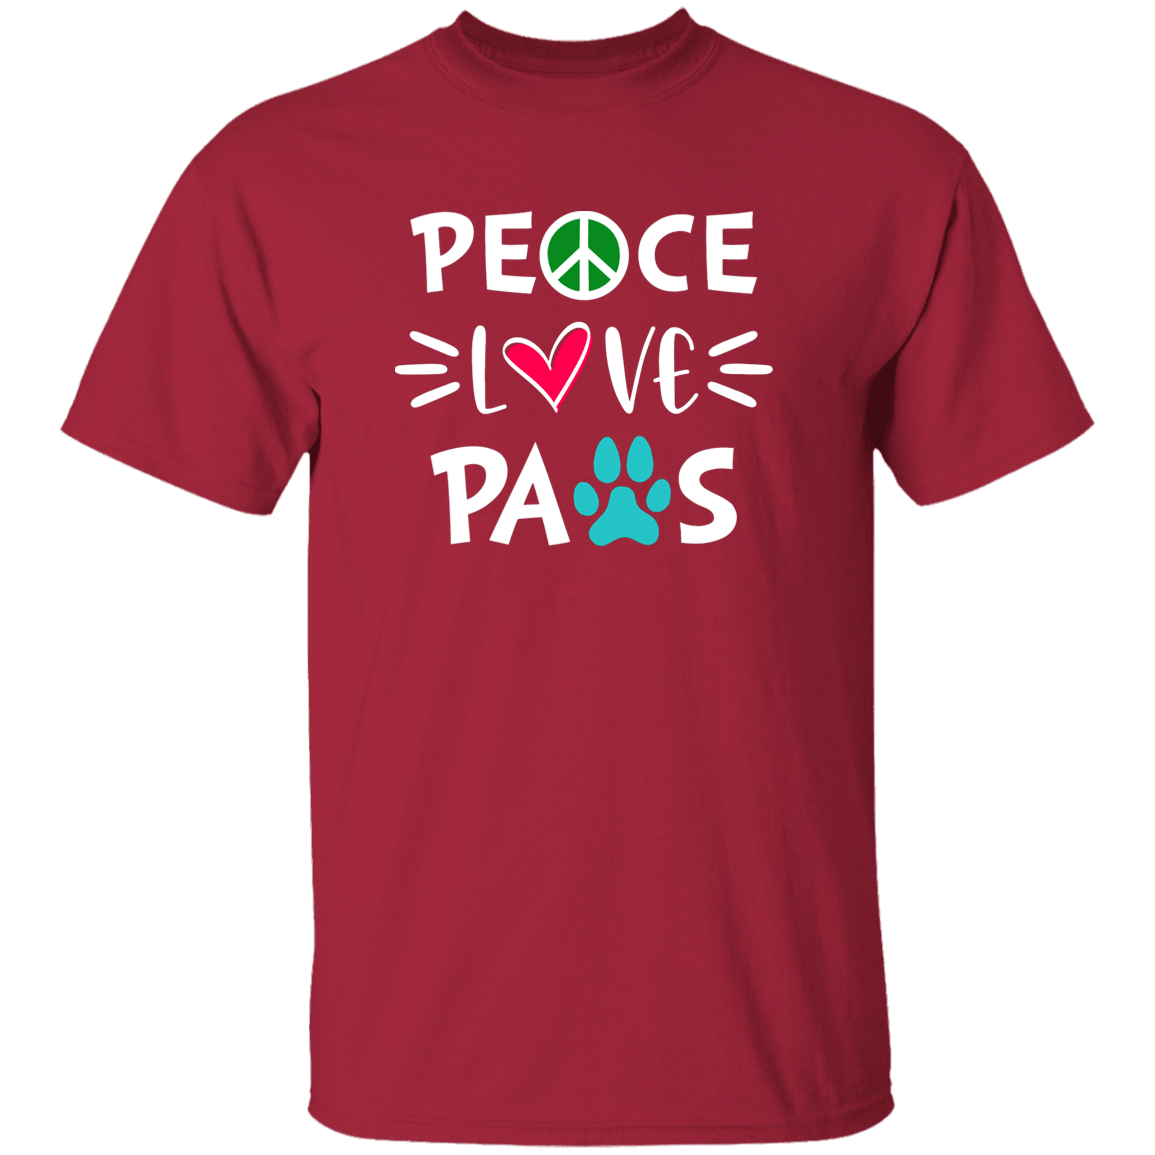 Peace Love Paws - T Shirt.